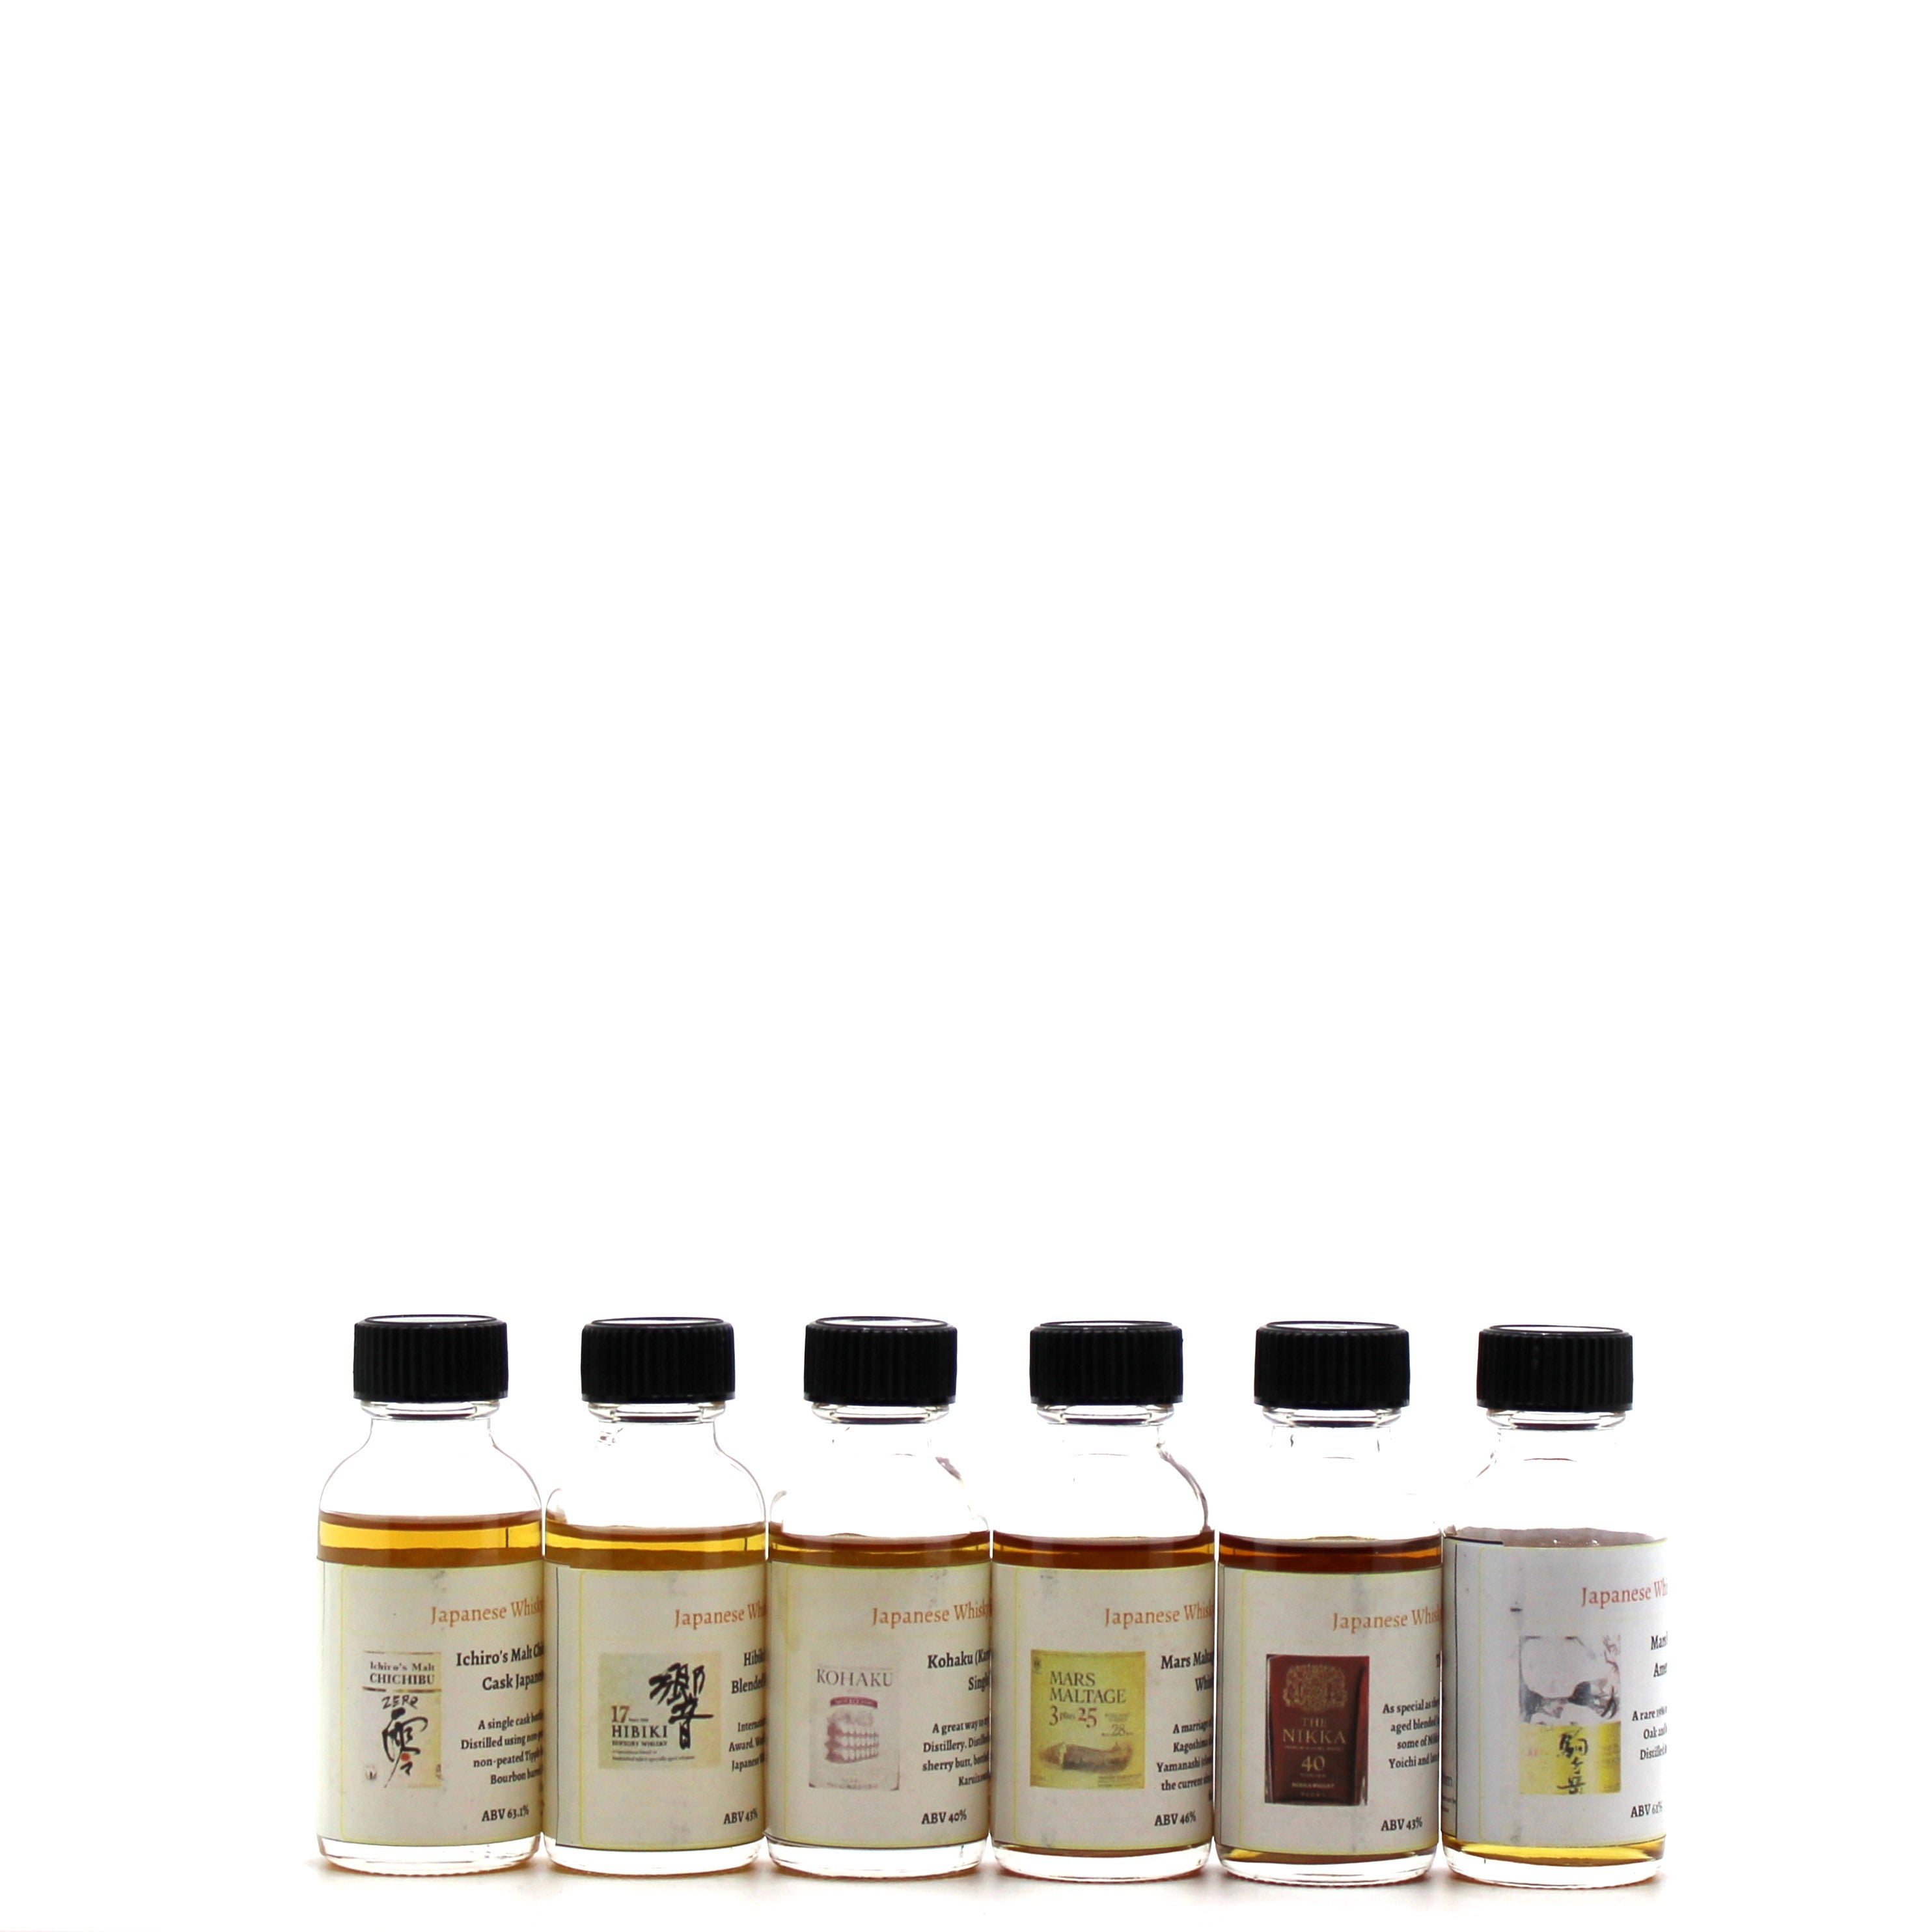 B. Fine & Rare Japanese Single Malt Whisky (6 x 30 ml) Tasting Set with Gift Box